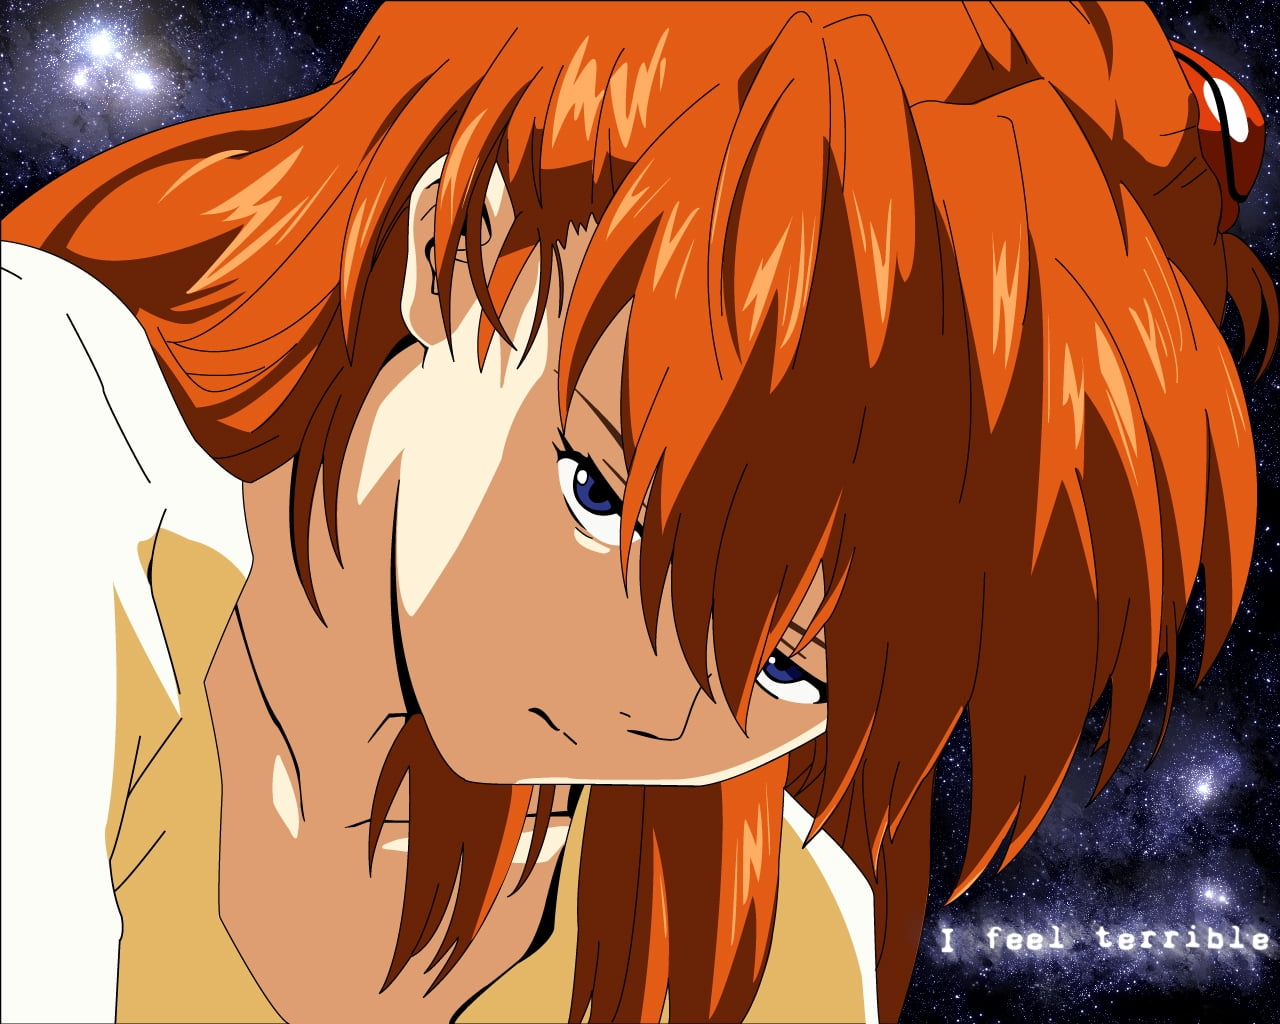 31 Orange Haired Anime Characters RANKED  iWA